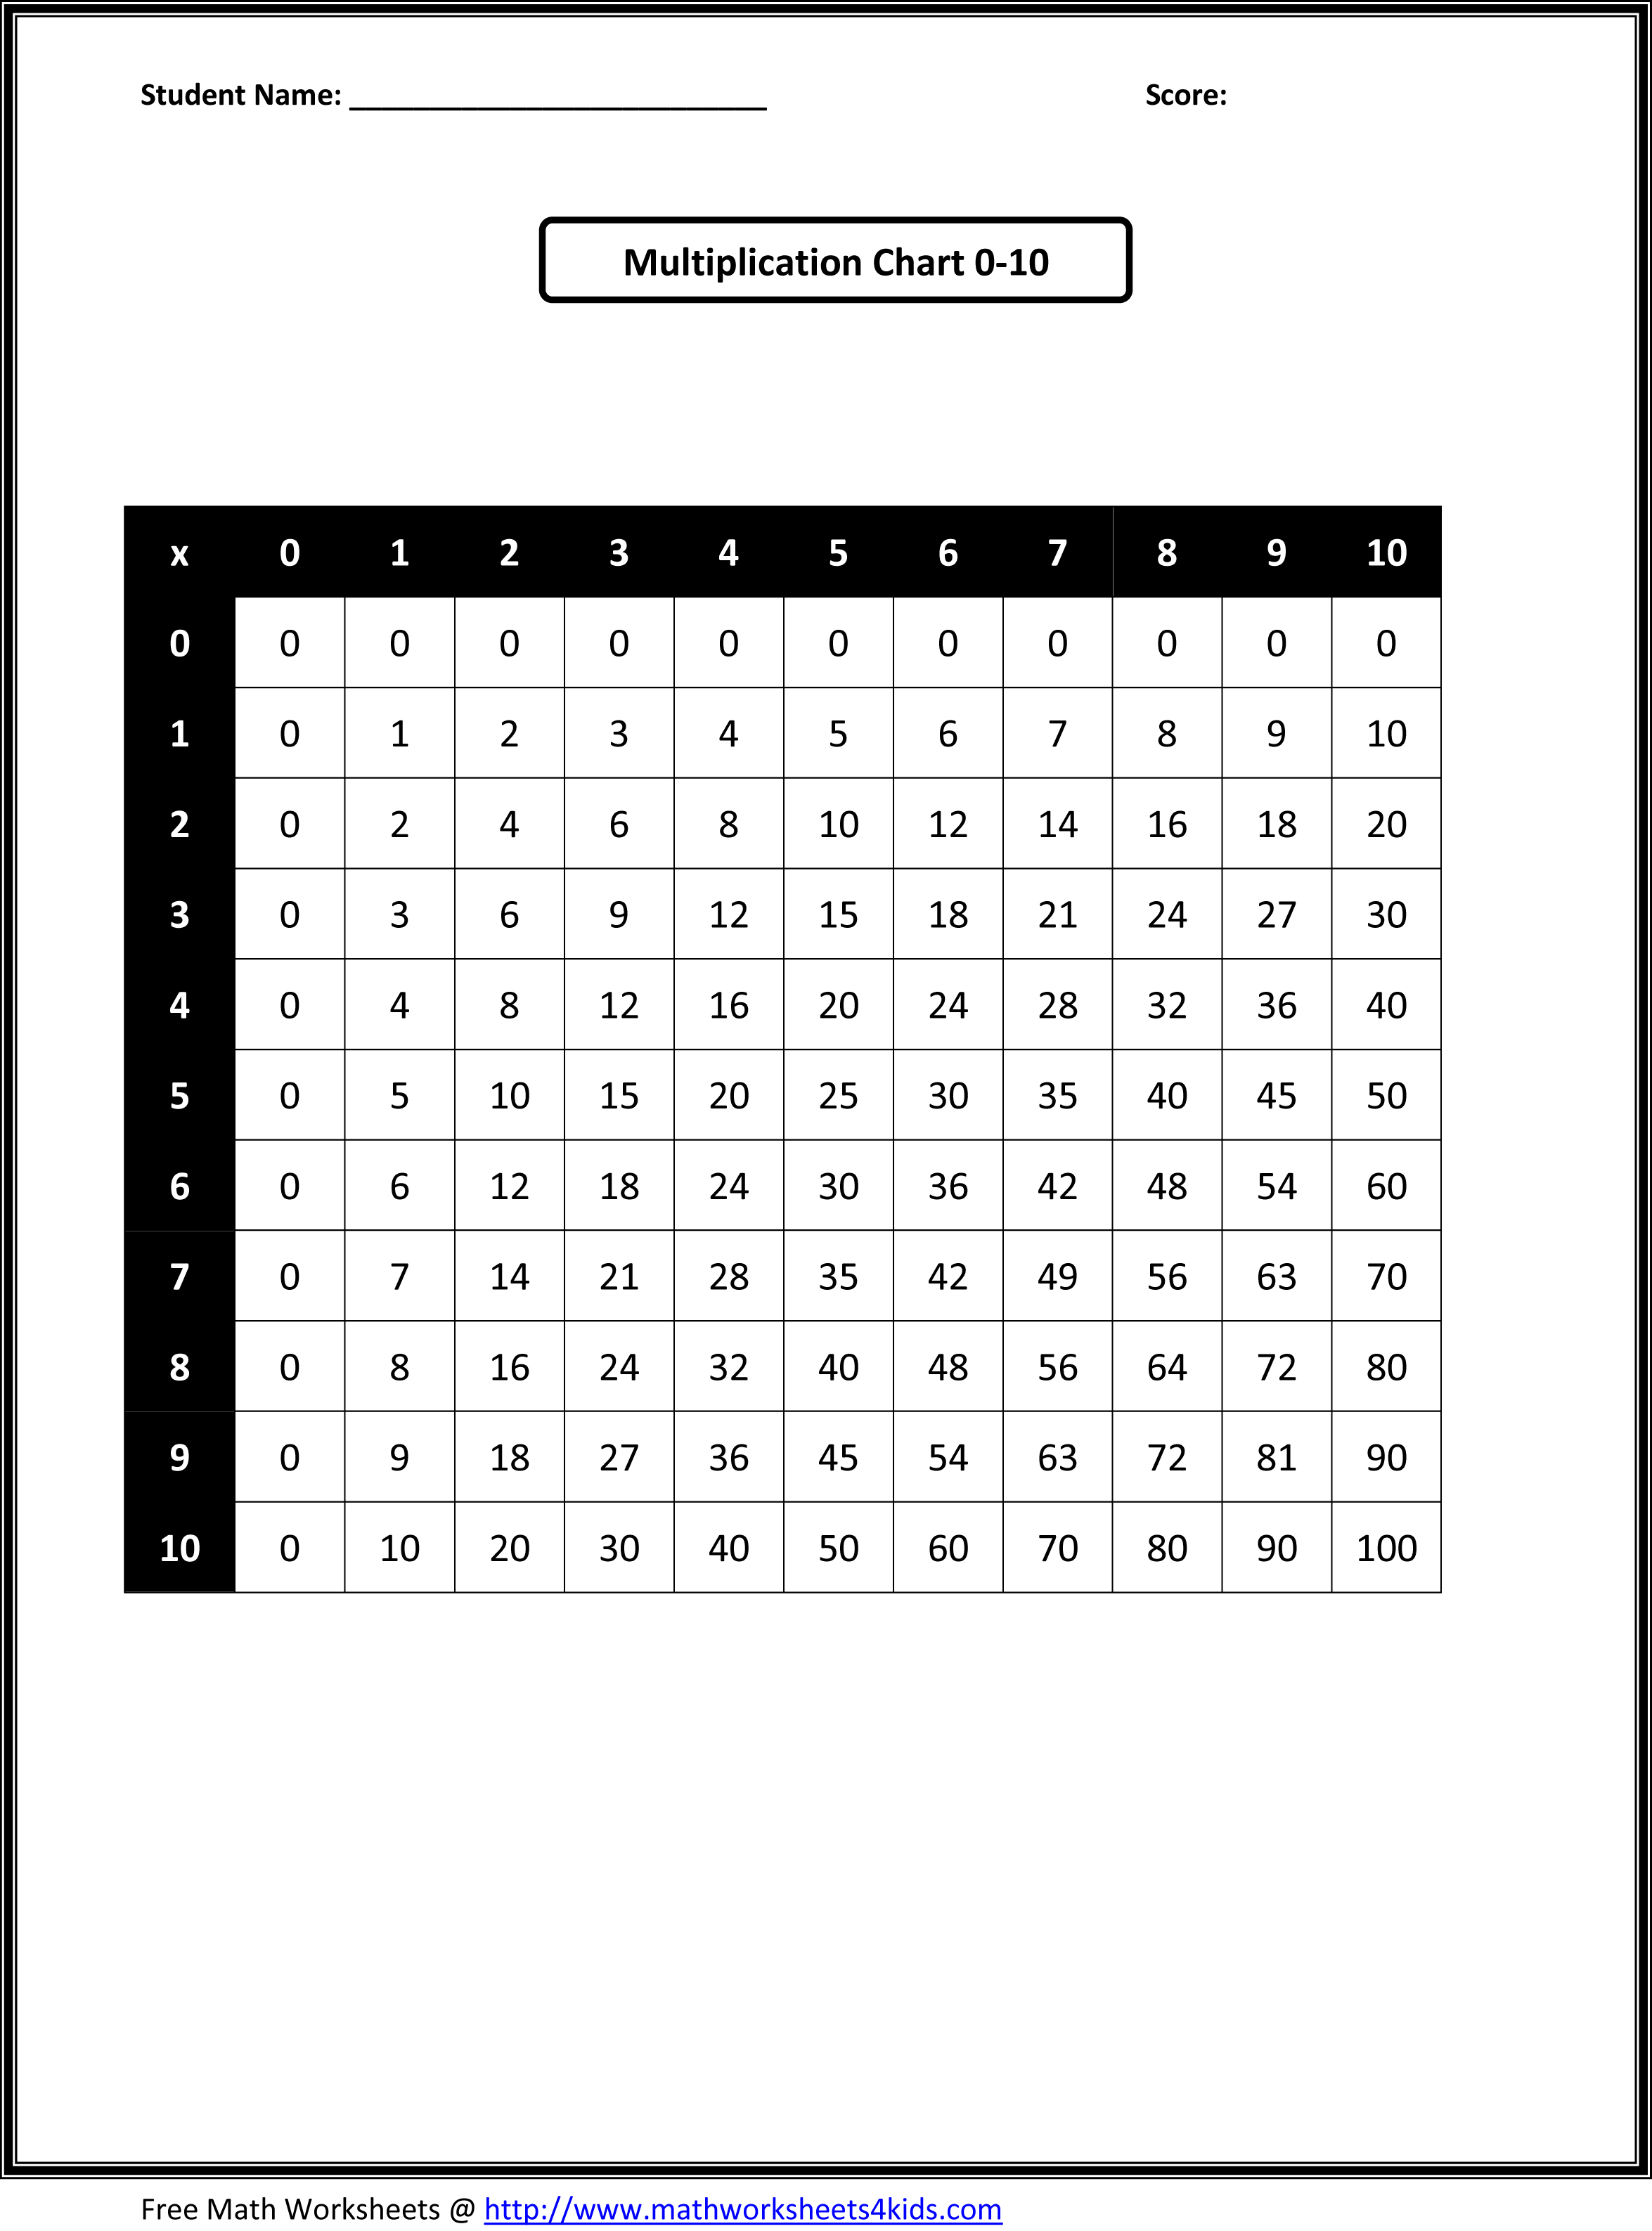 Multiplication Chart 0-10